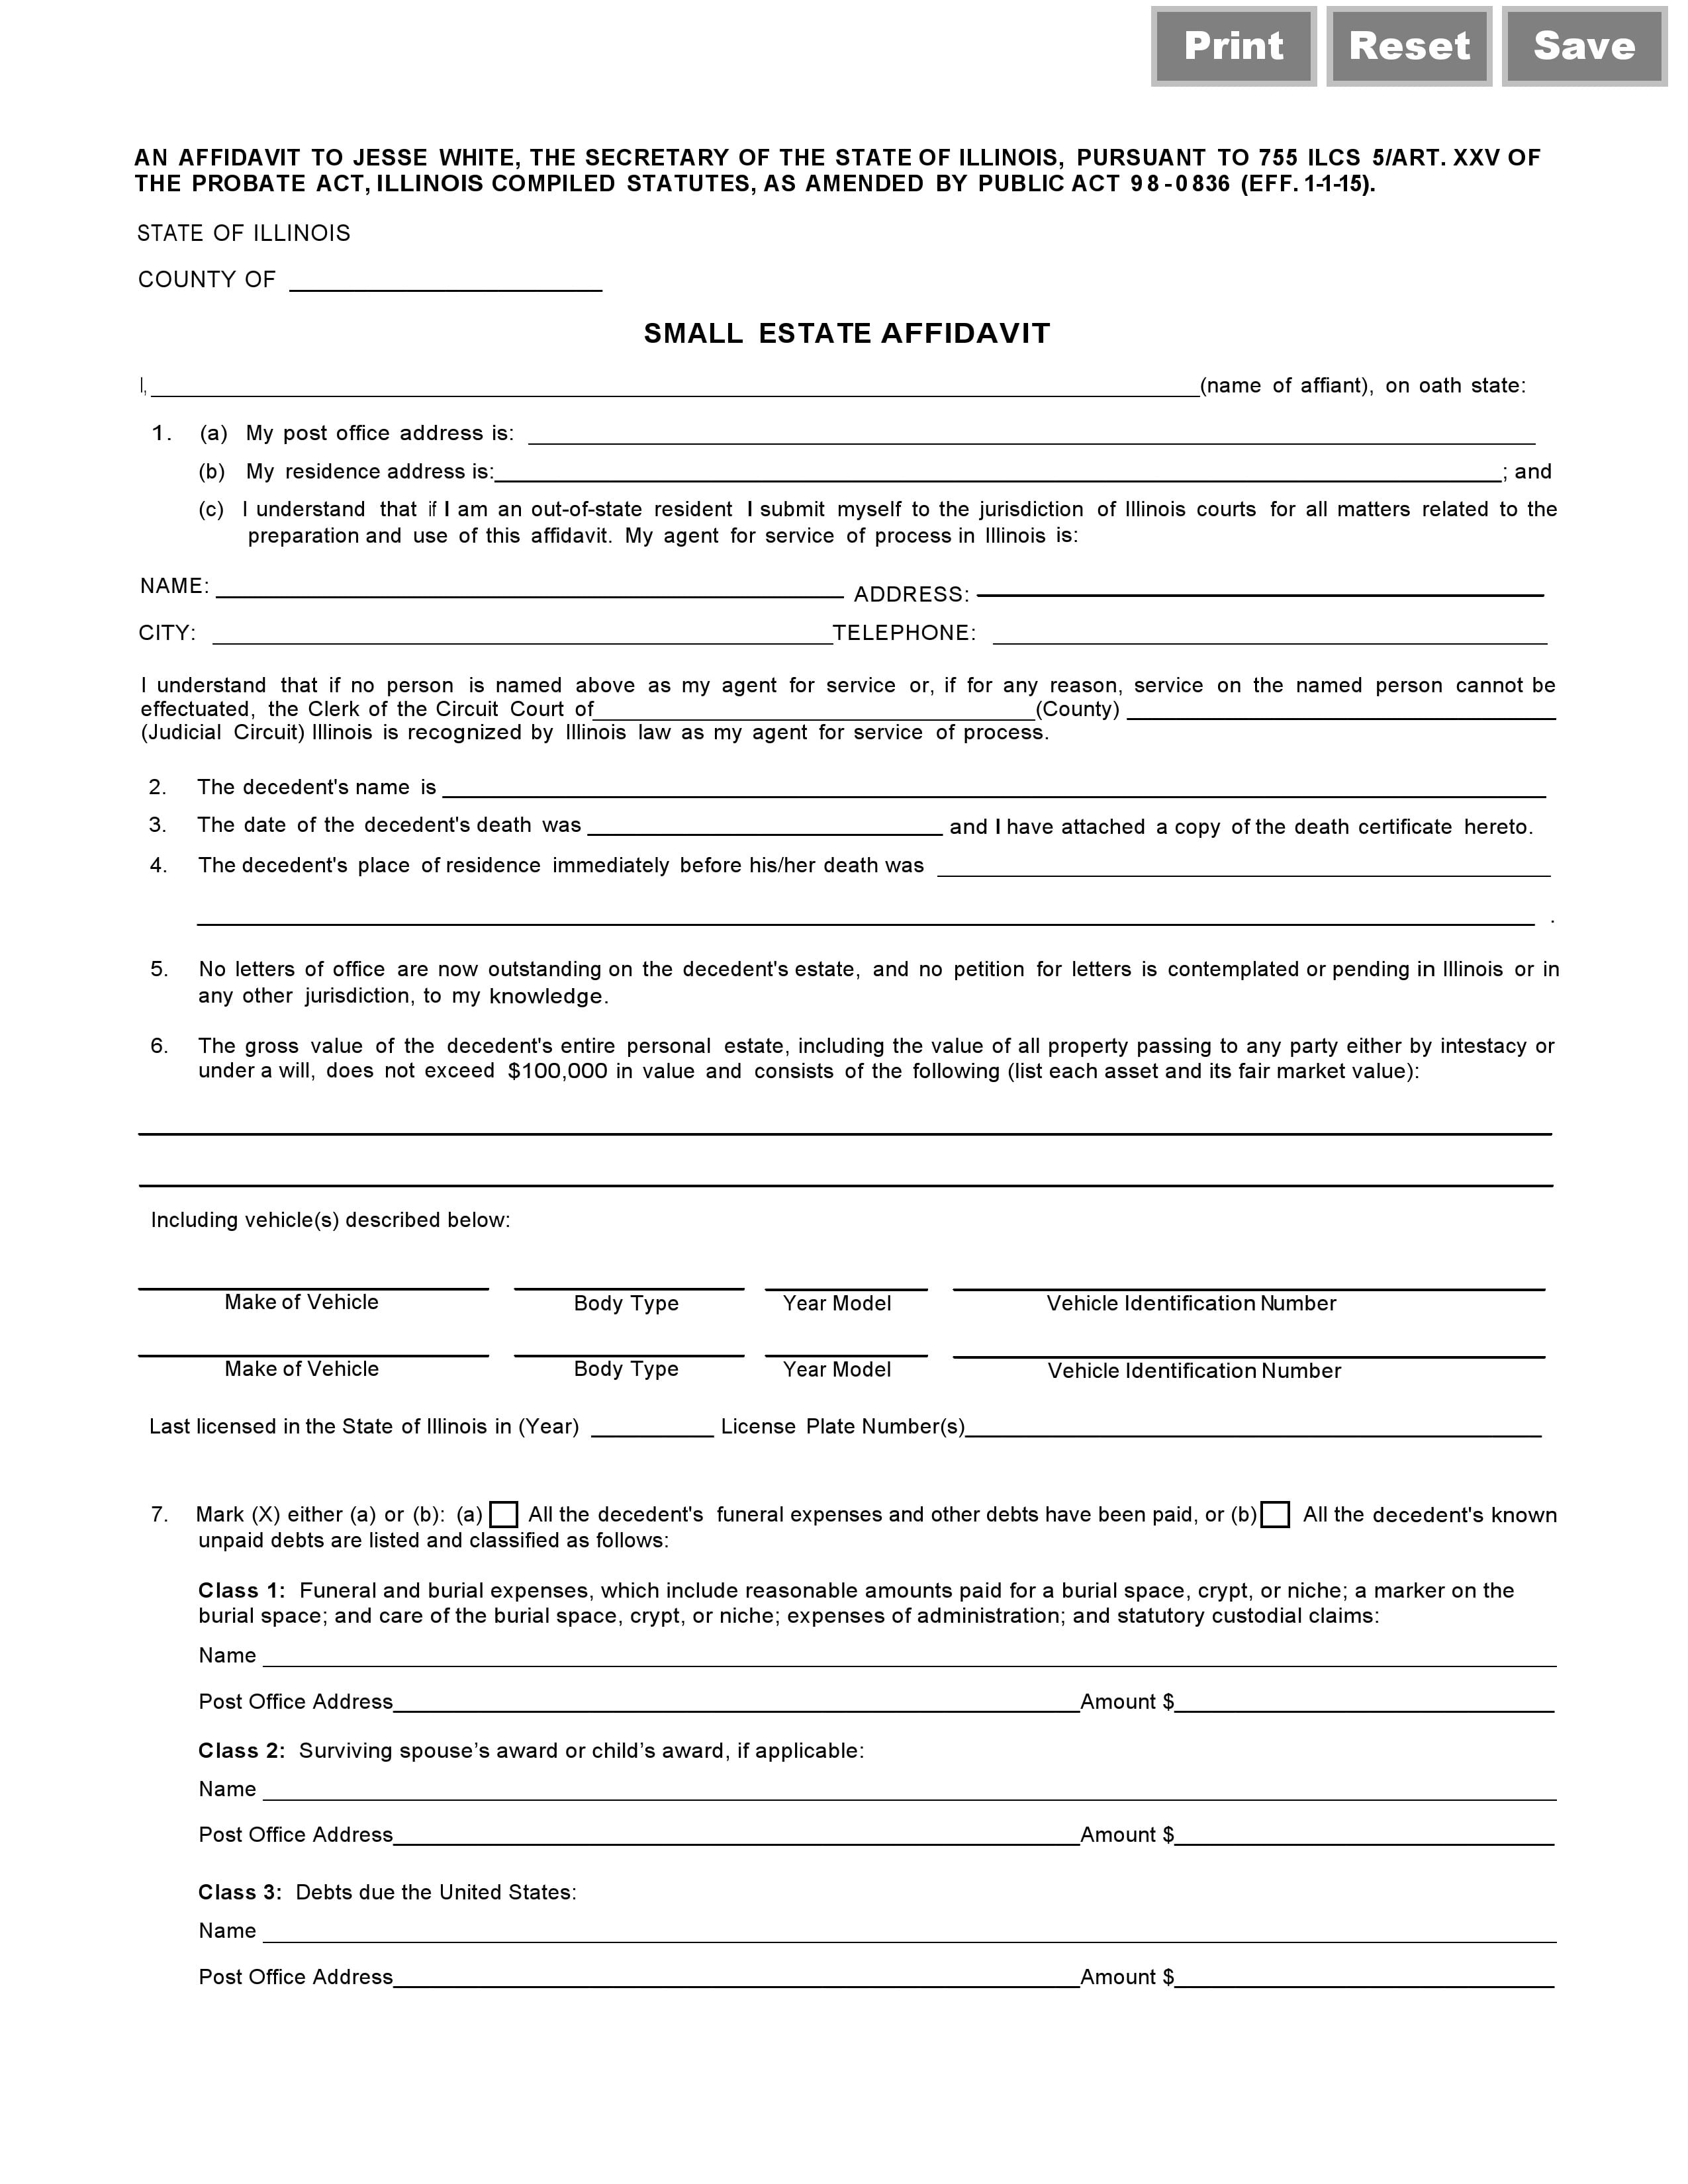 Download Free Illinois Small Estate Affidavit Form Form Download